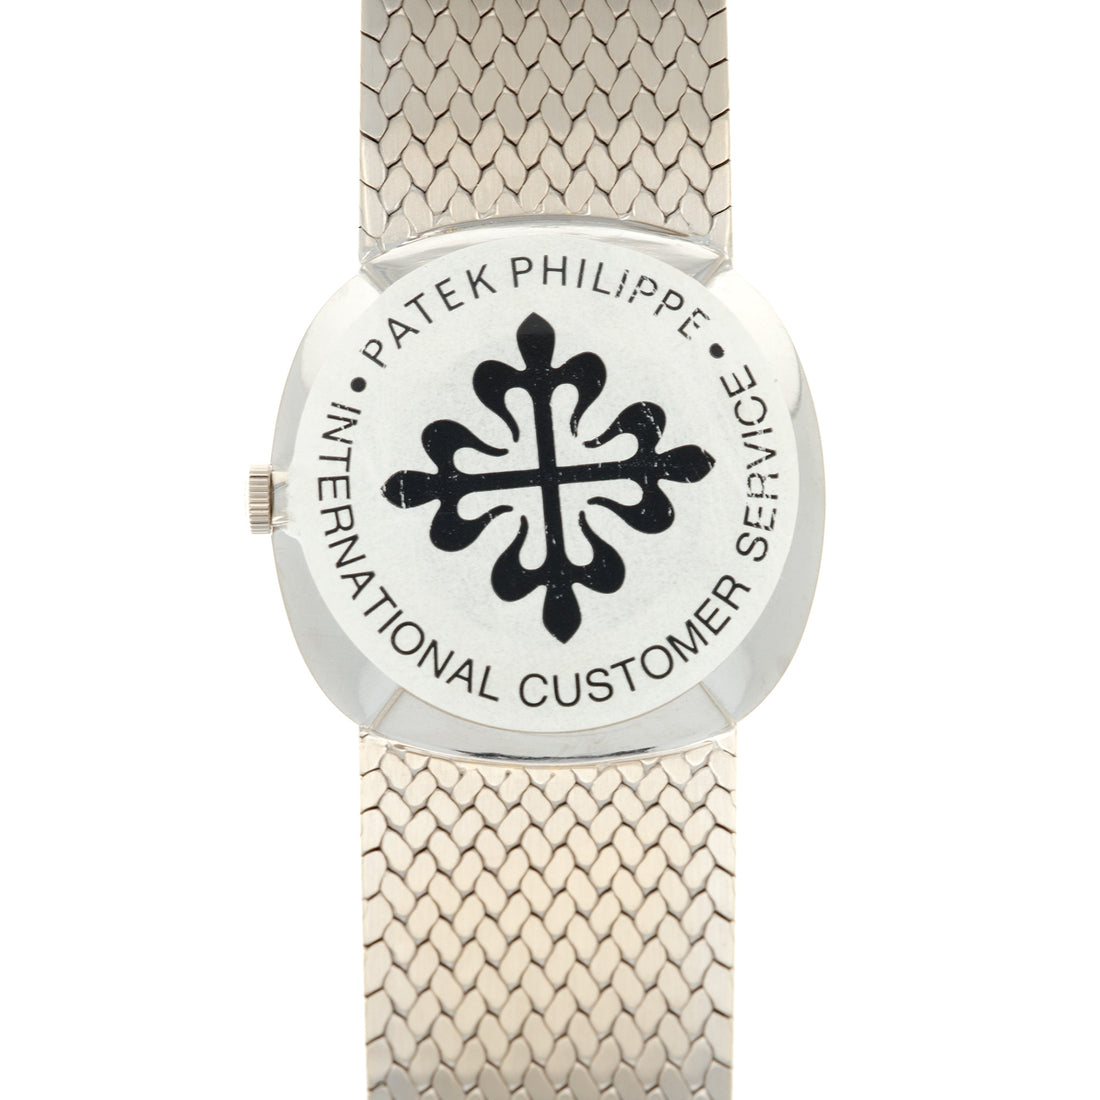 Patek Philippe White Gold Mechanical Watch Ref. 3544